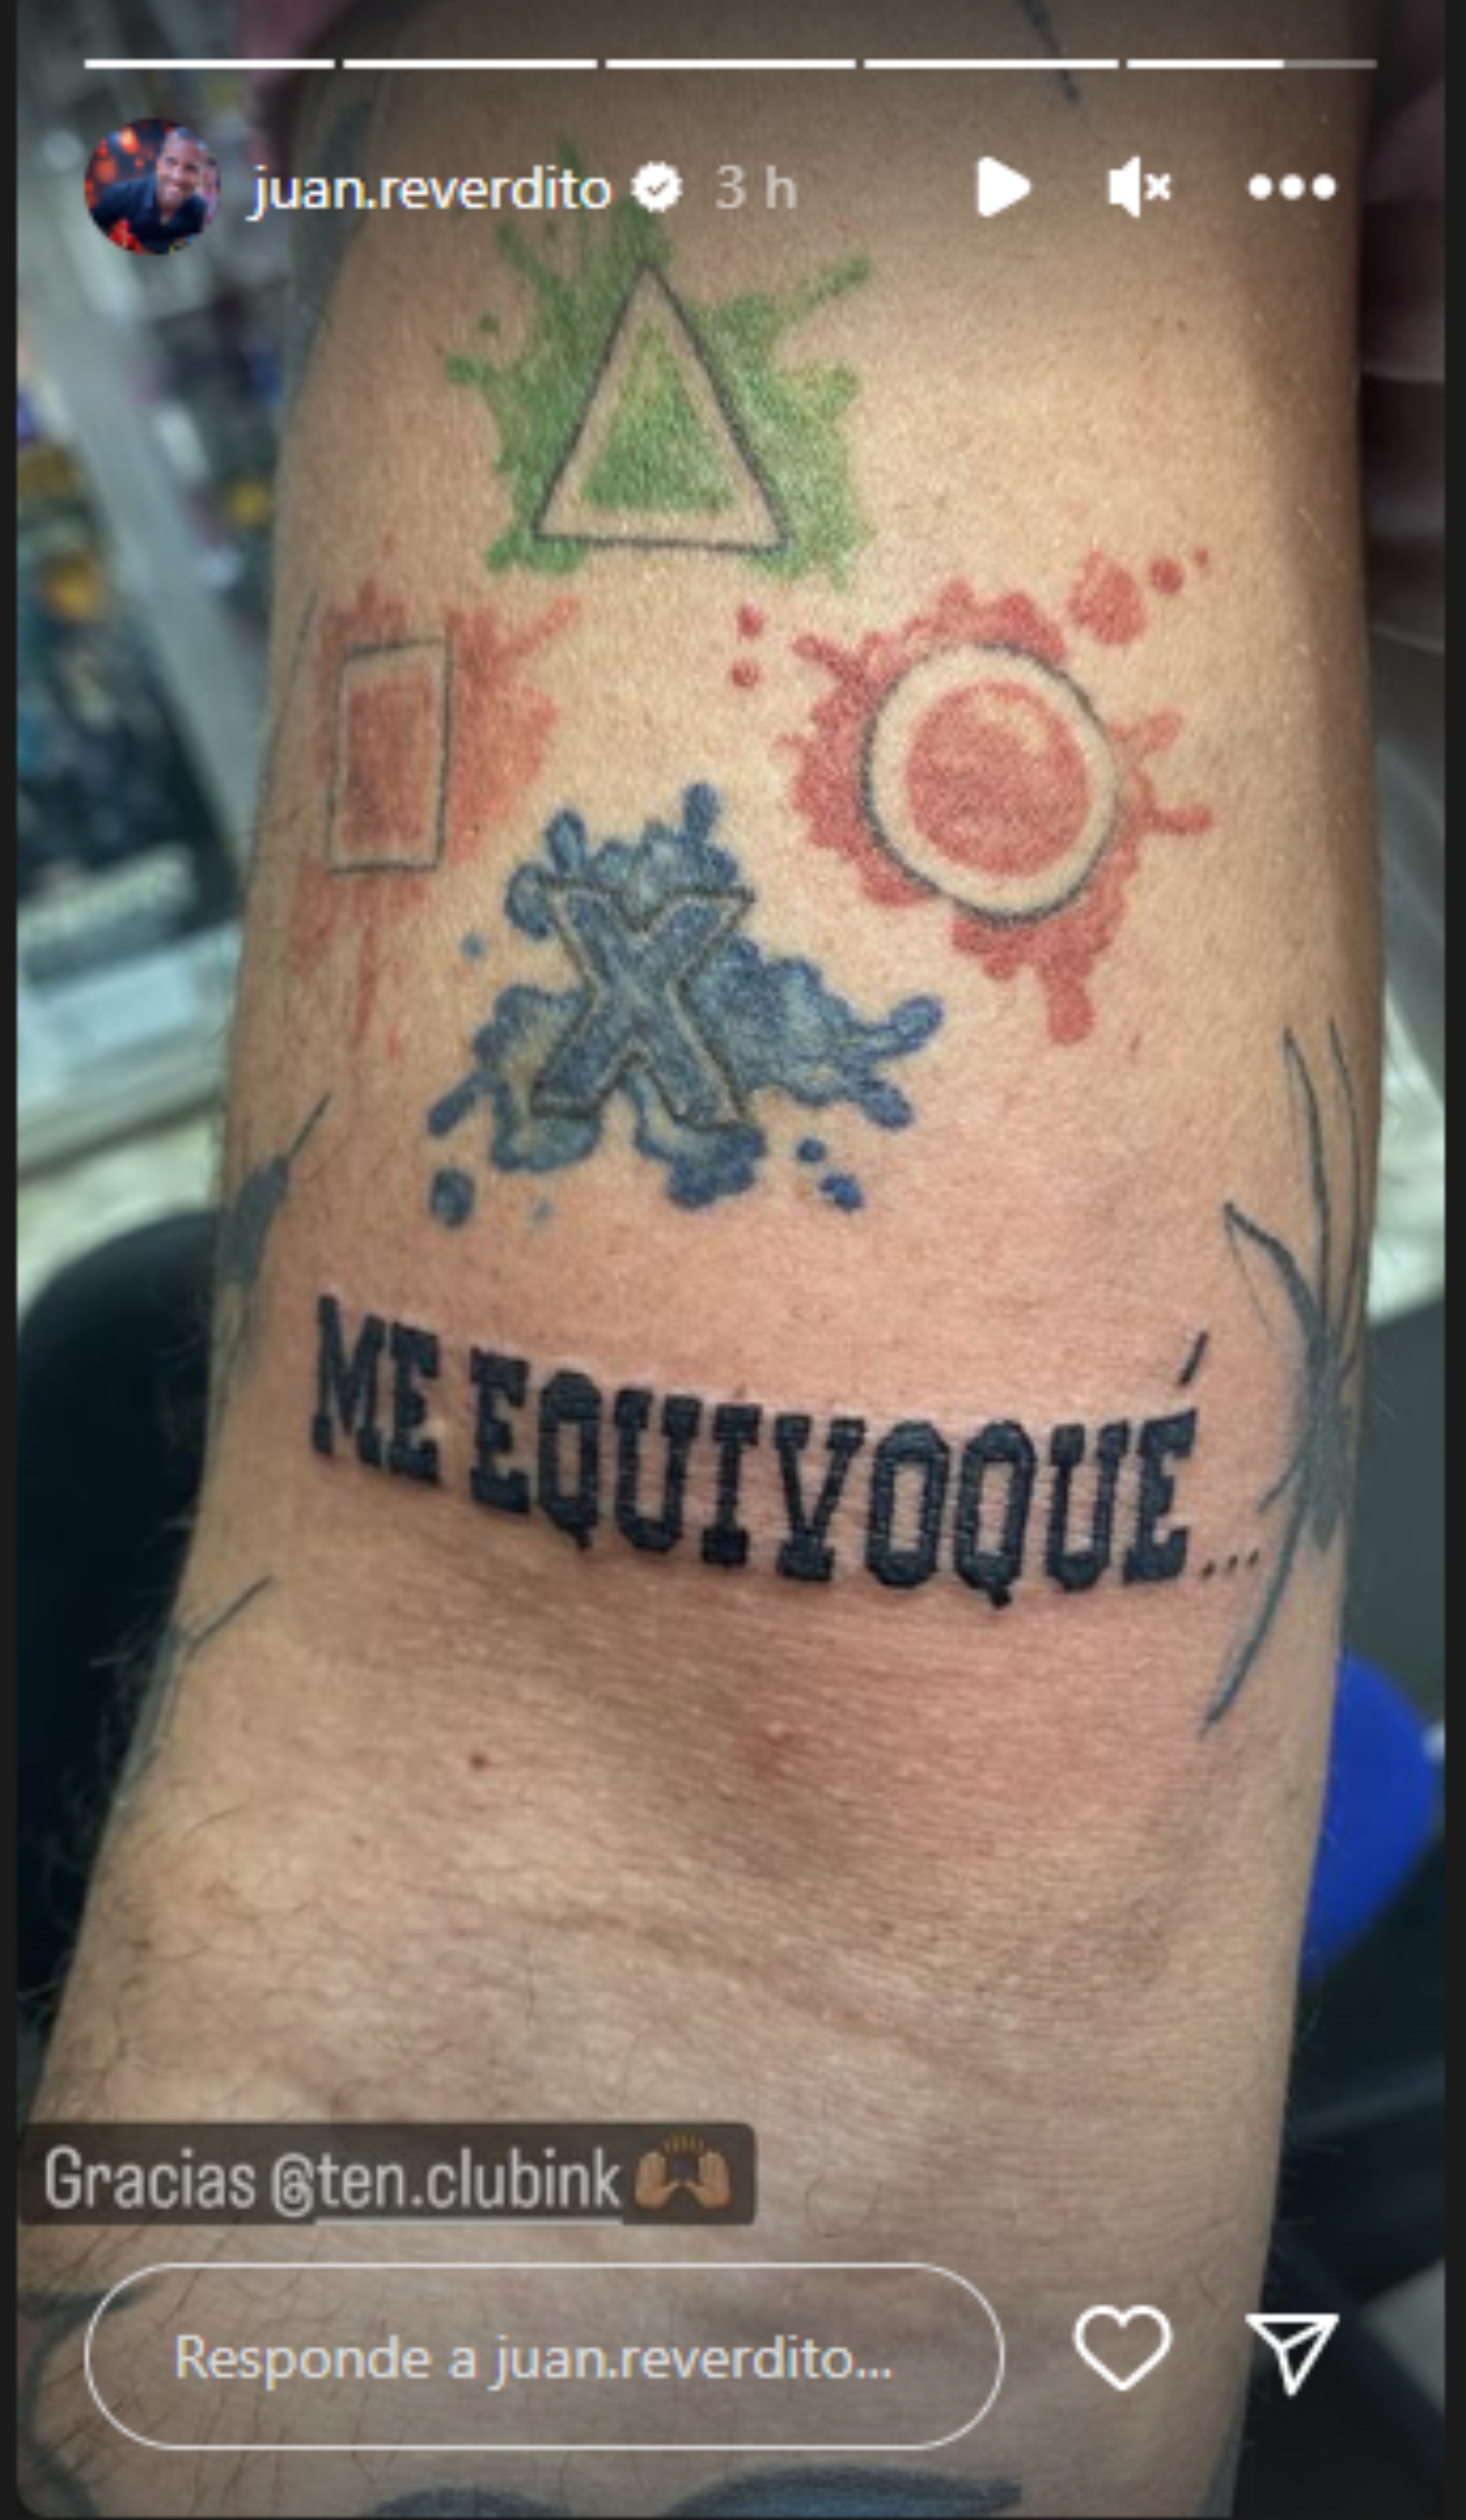 El tatuaje de Juan Reverdito